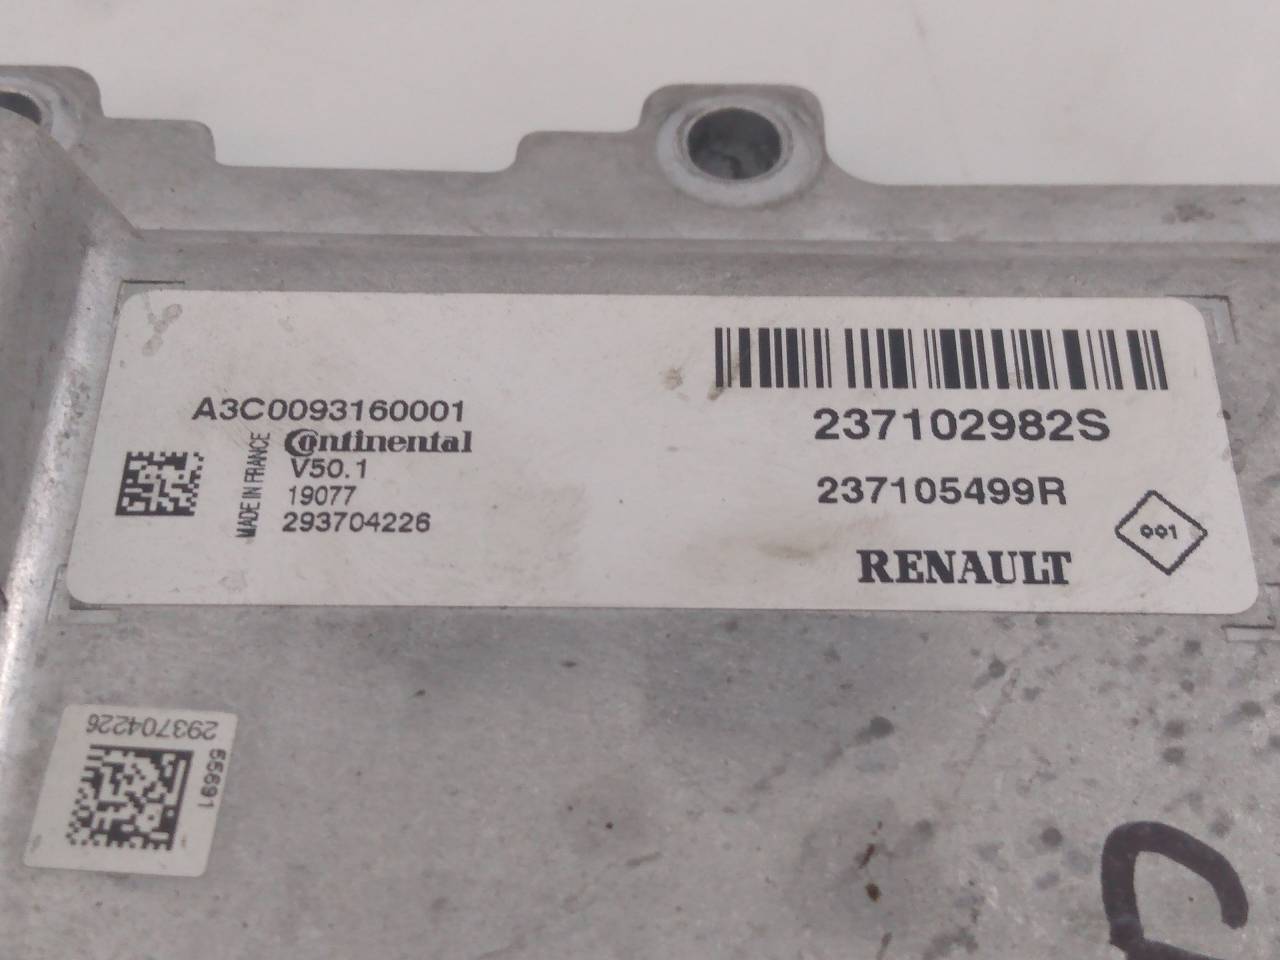 RENAULT Clio 3 generation (2005-2012) Engine Control Unit ECU 237102982S, 237105499R, E2-A1-20-1 20958049